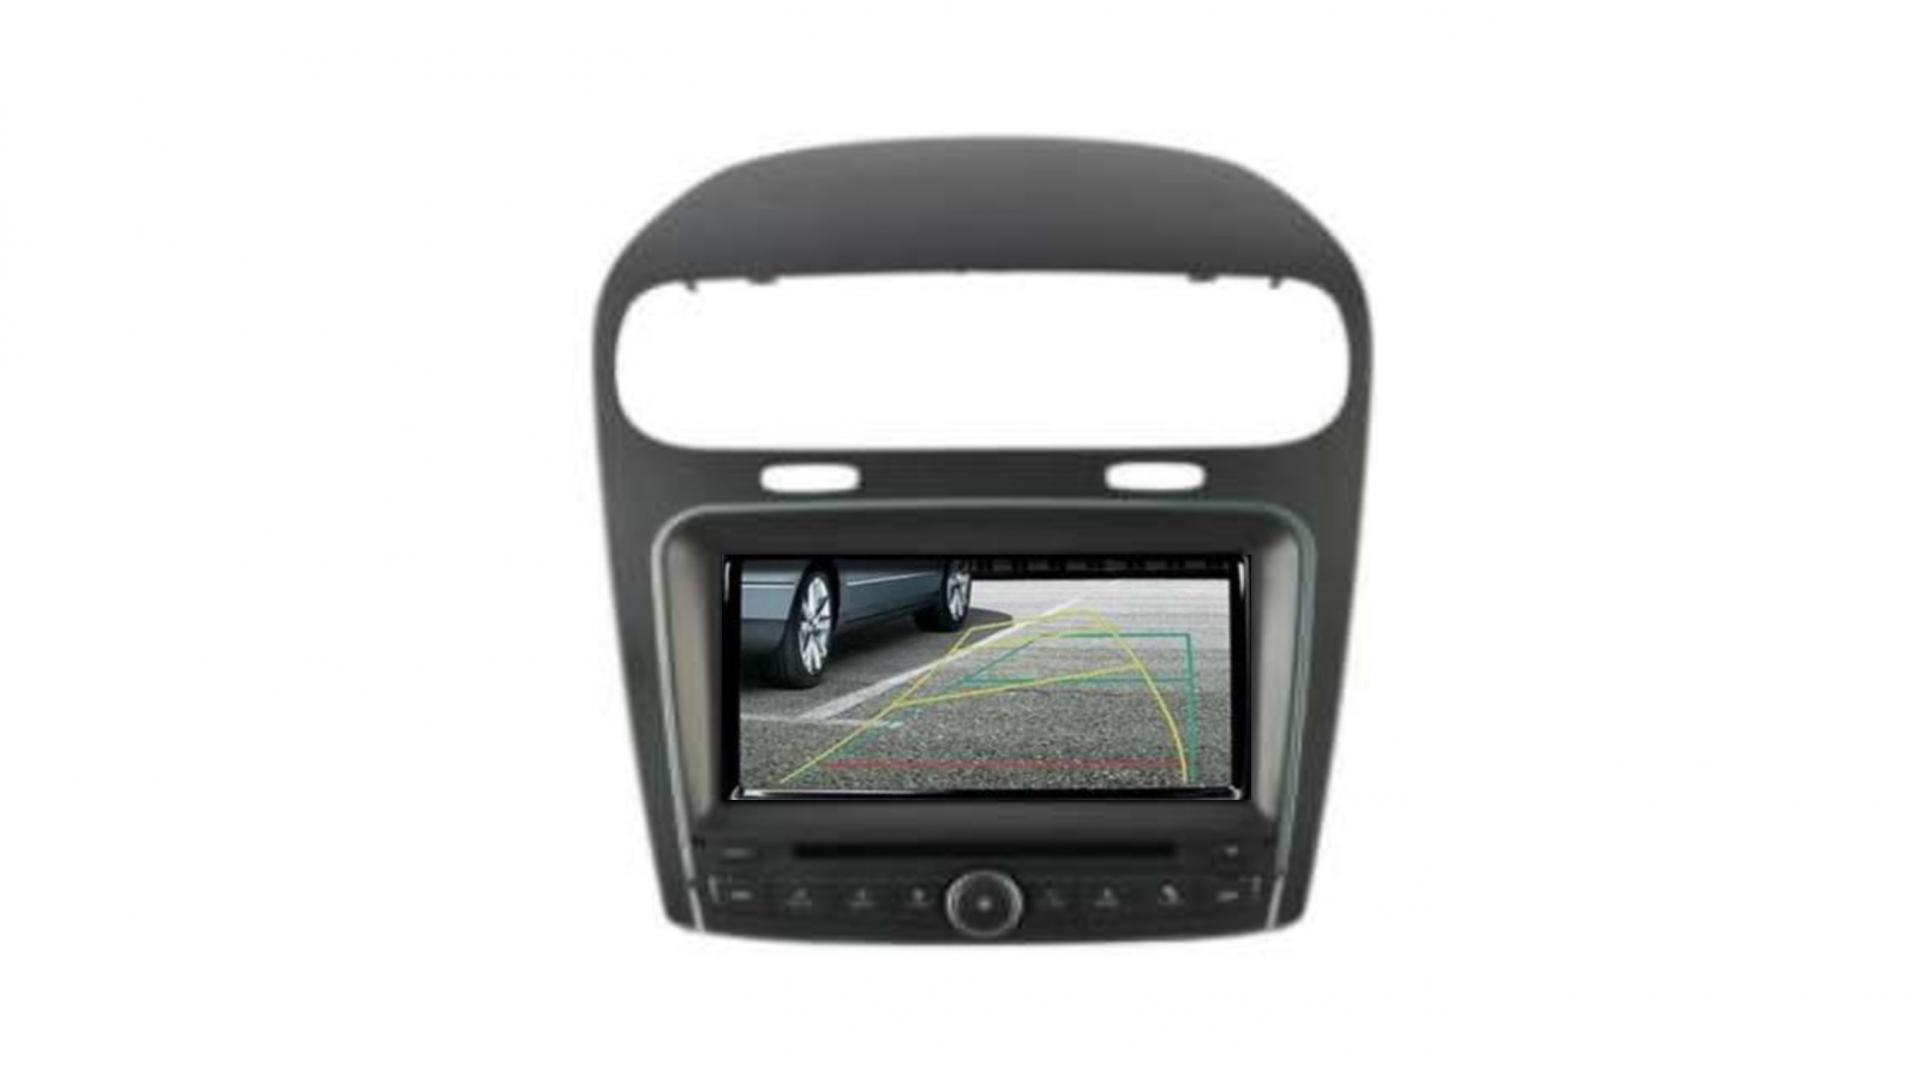 Autoradio androi d auto carplay gps dodge ram 1500 journey 2